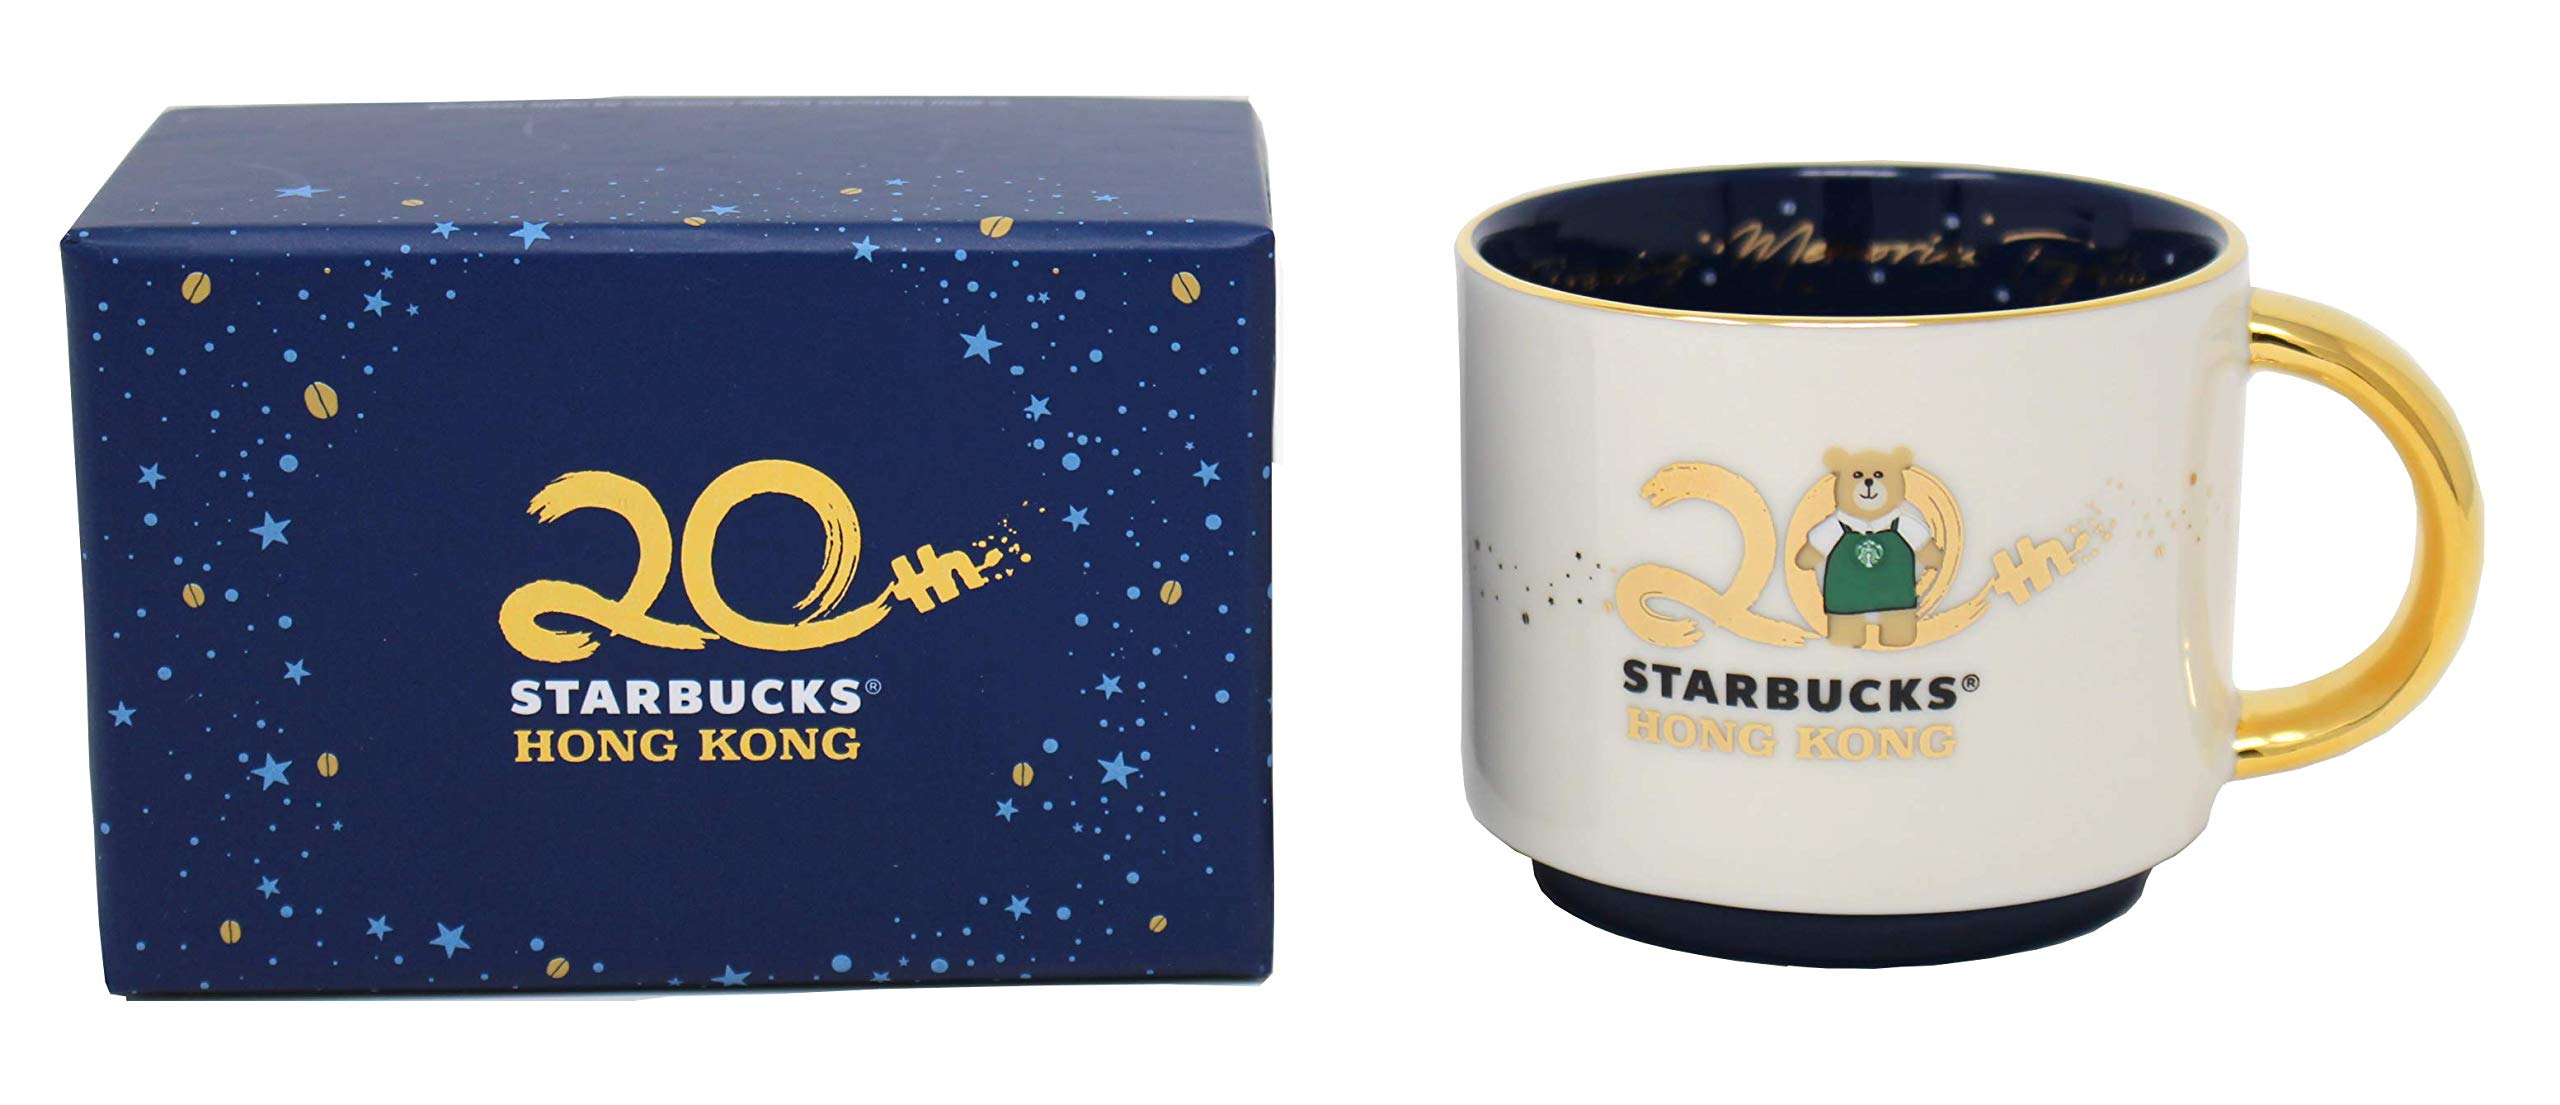 Starbucks Hong Kong 20th Anniversary Bearista Demitasse Mug, 3oz